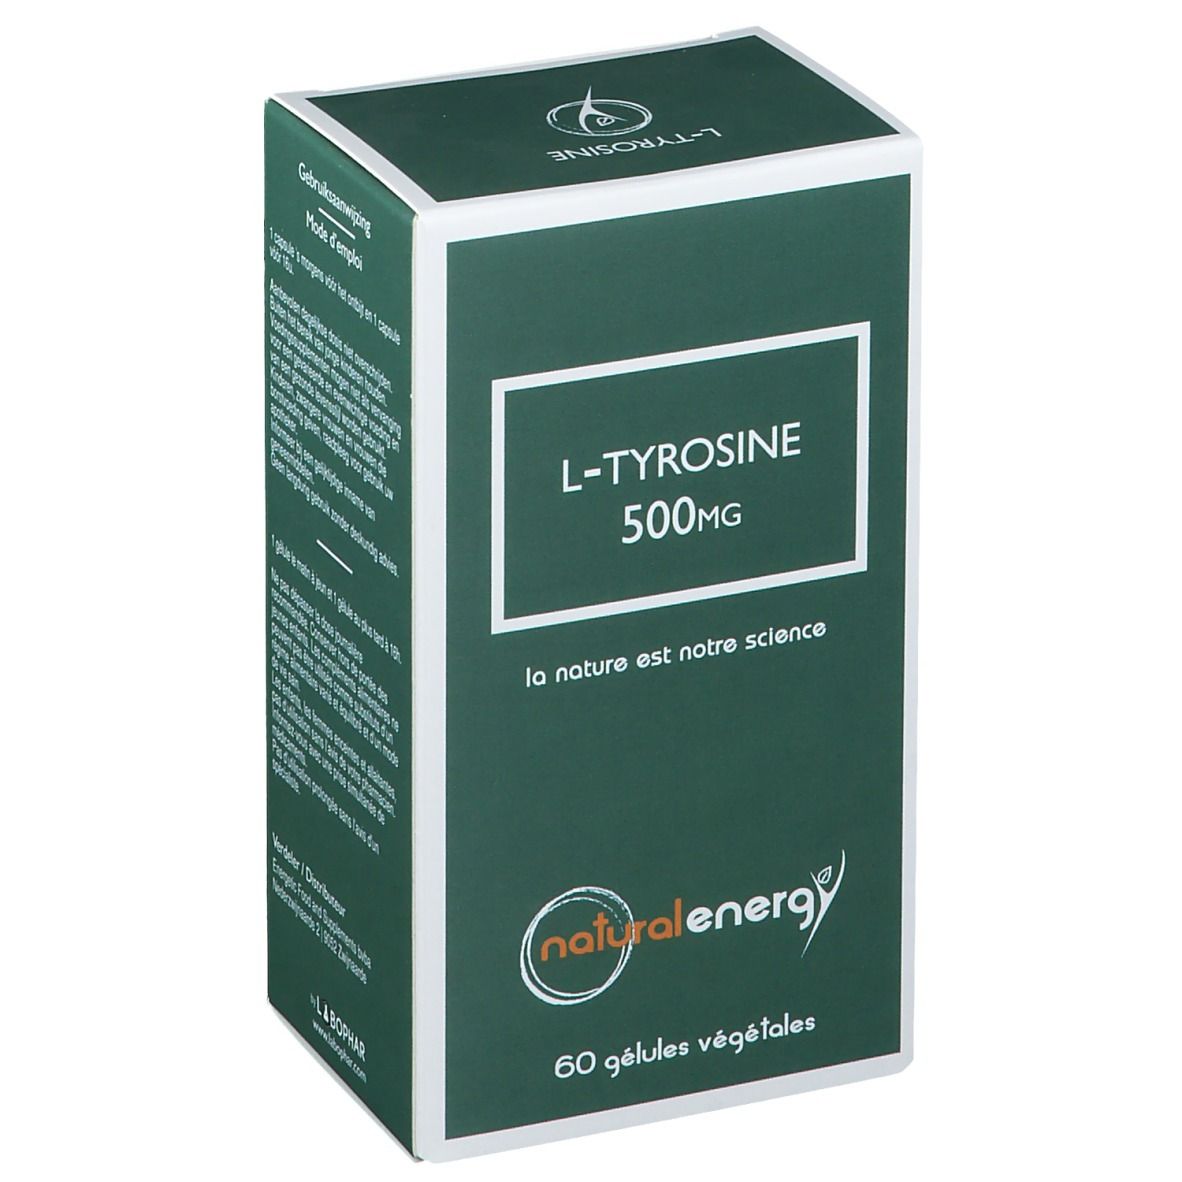 Natural Energy L-Tyrosine 500Mg